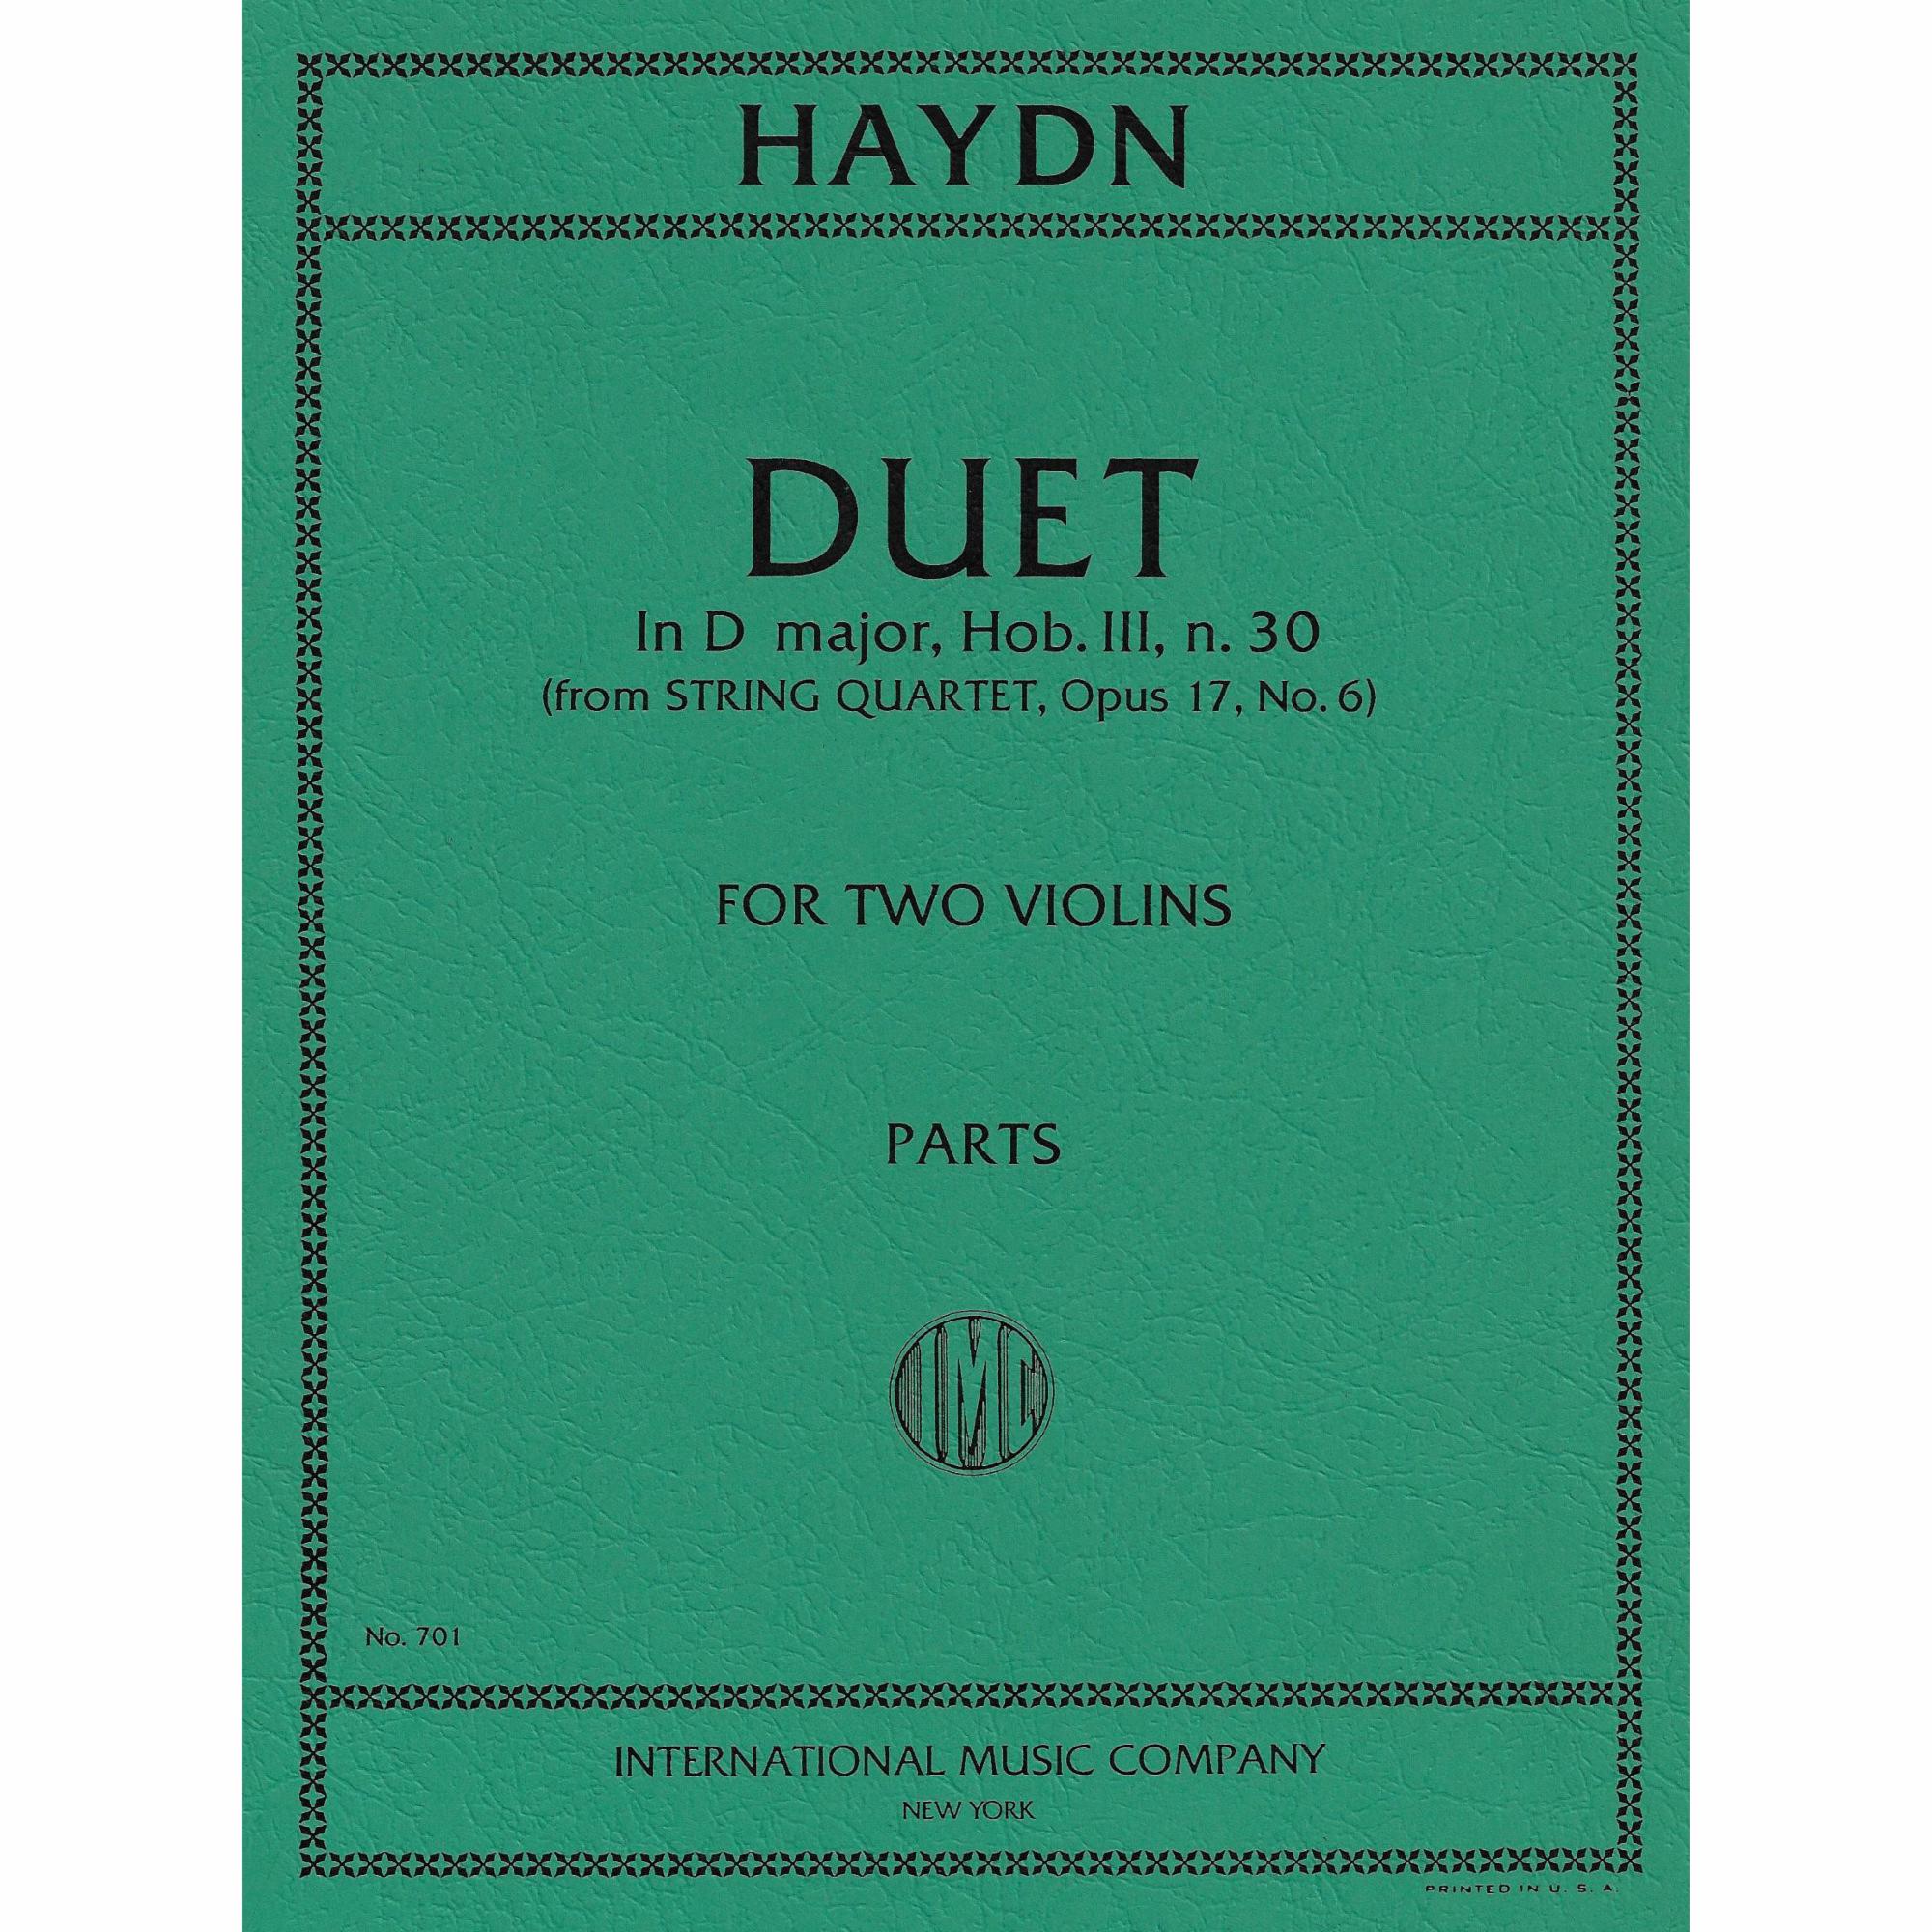 Haydn -- Duet in D Major, from String Quartet Op. 17, No. 6, for Two Violins